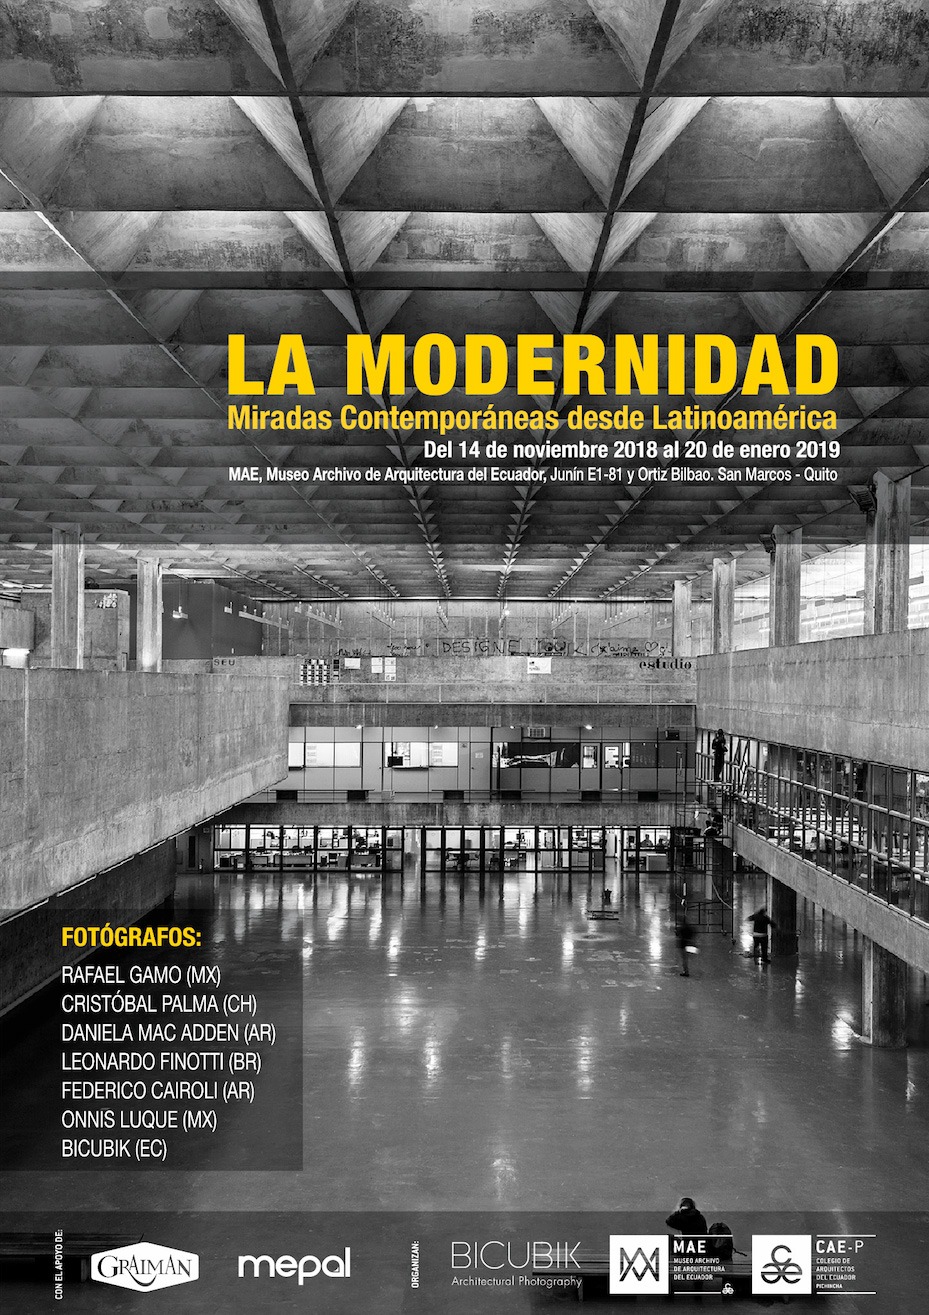 Exposición: La Modernidad, miradas contemporáneas desde Latinoamérica – MAE